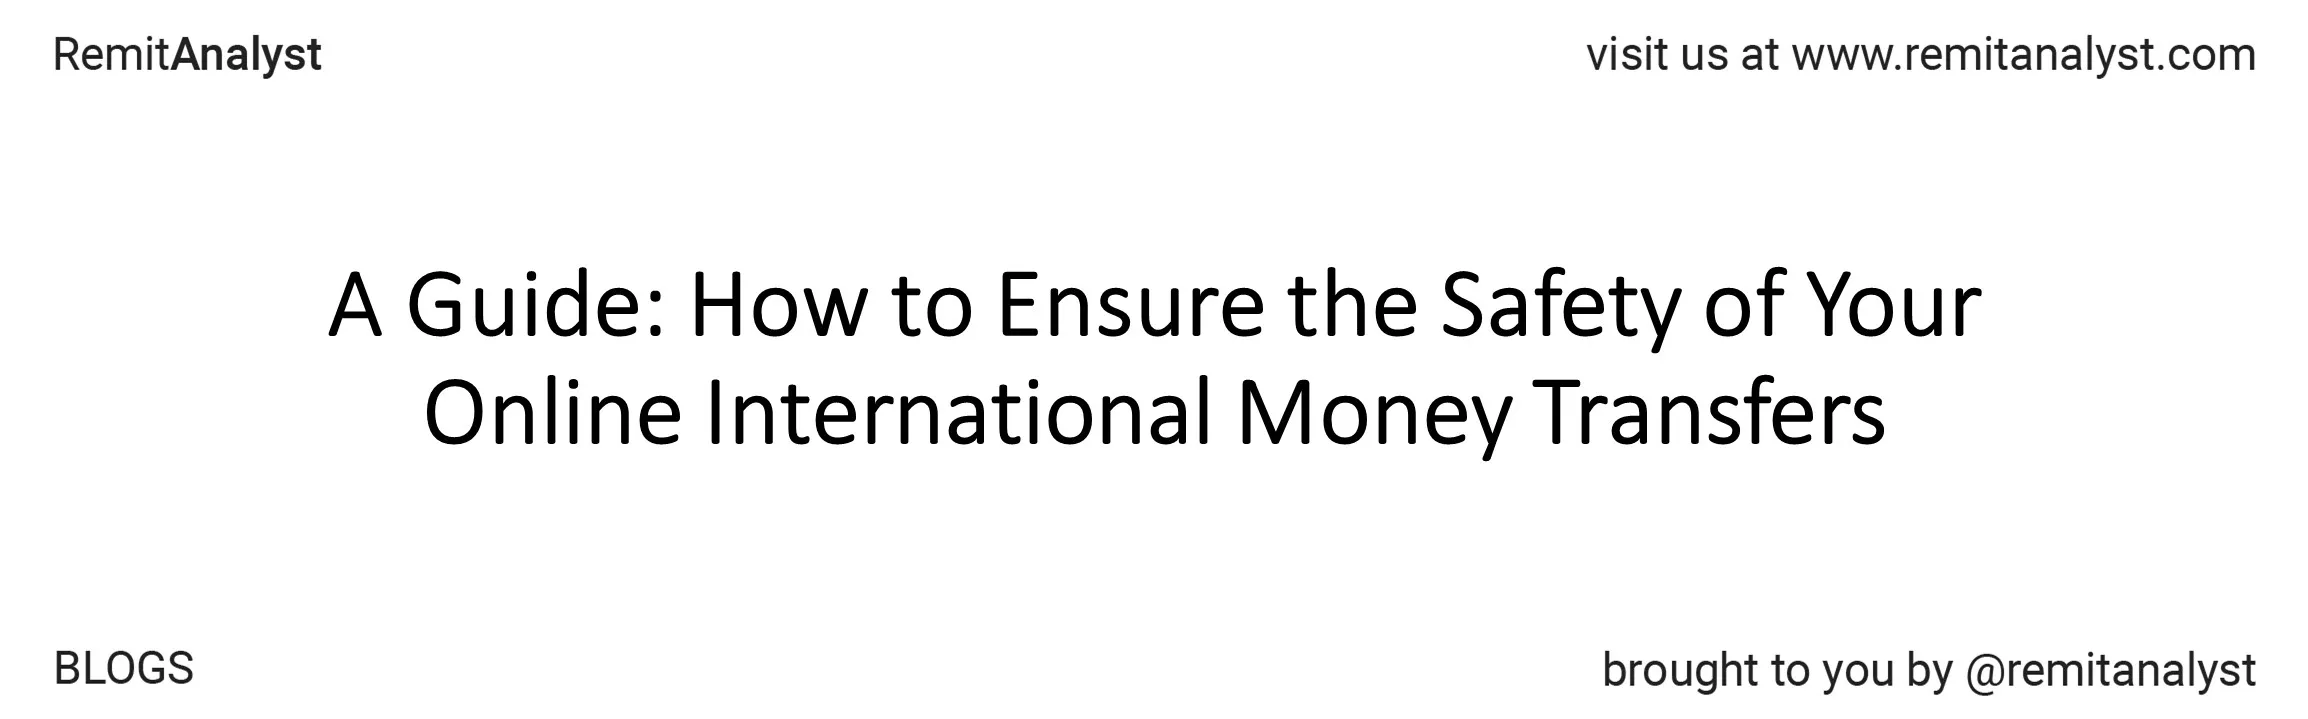 safety-online-international-money-transfers-title